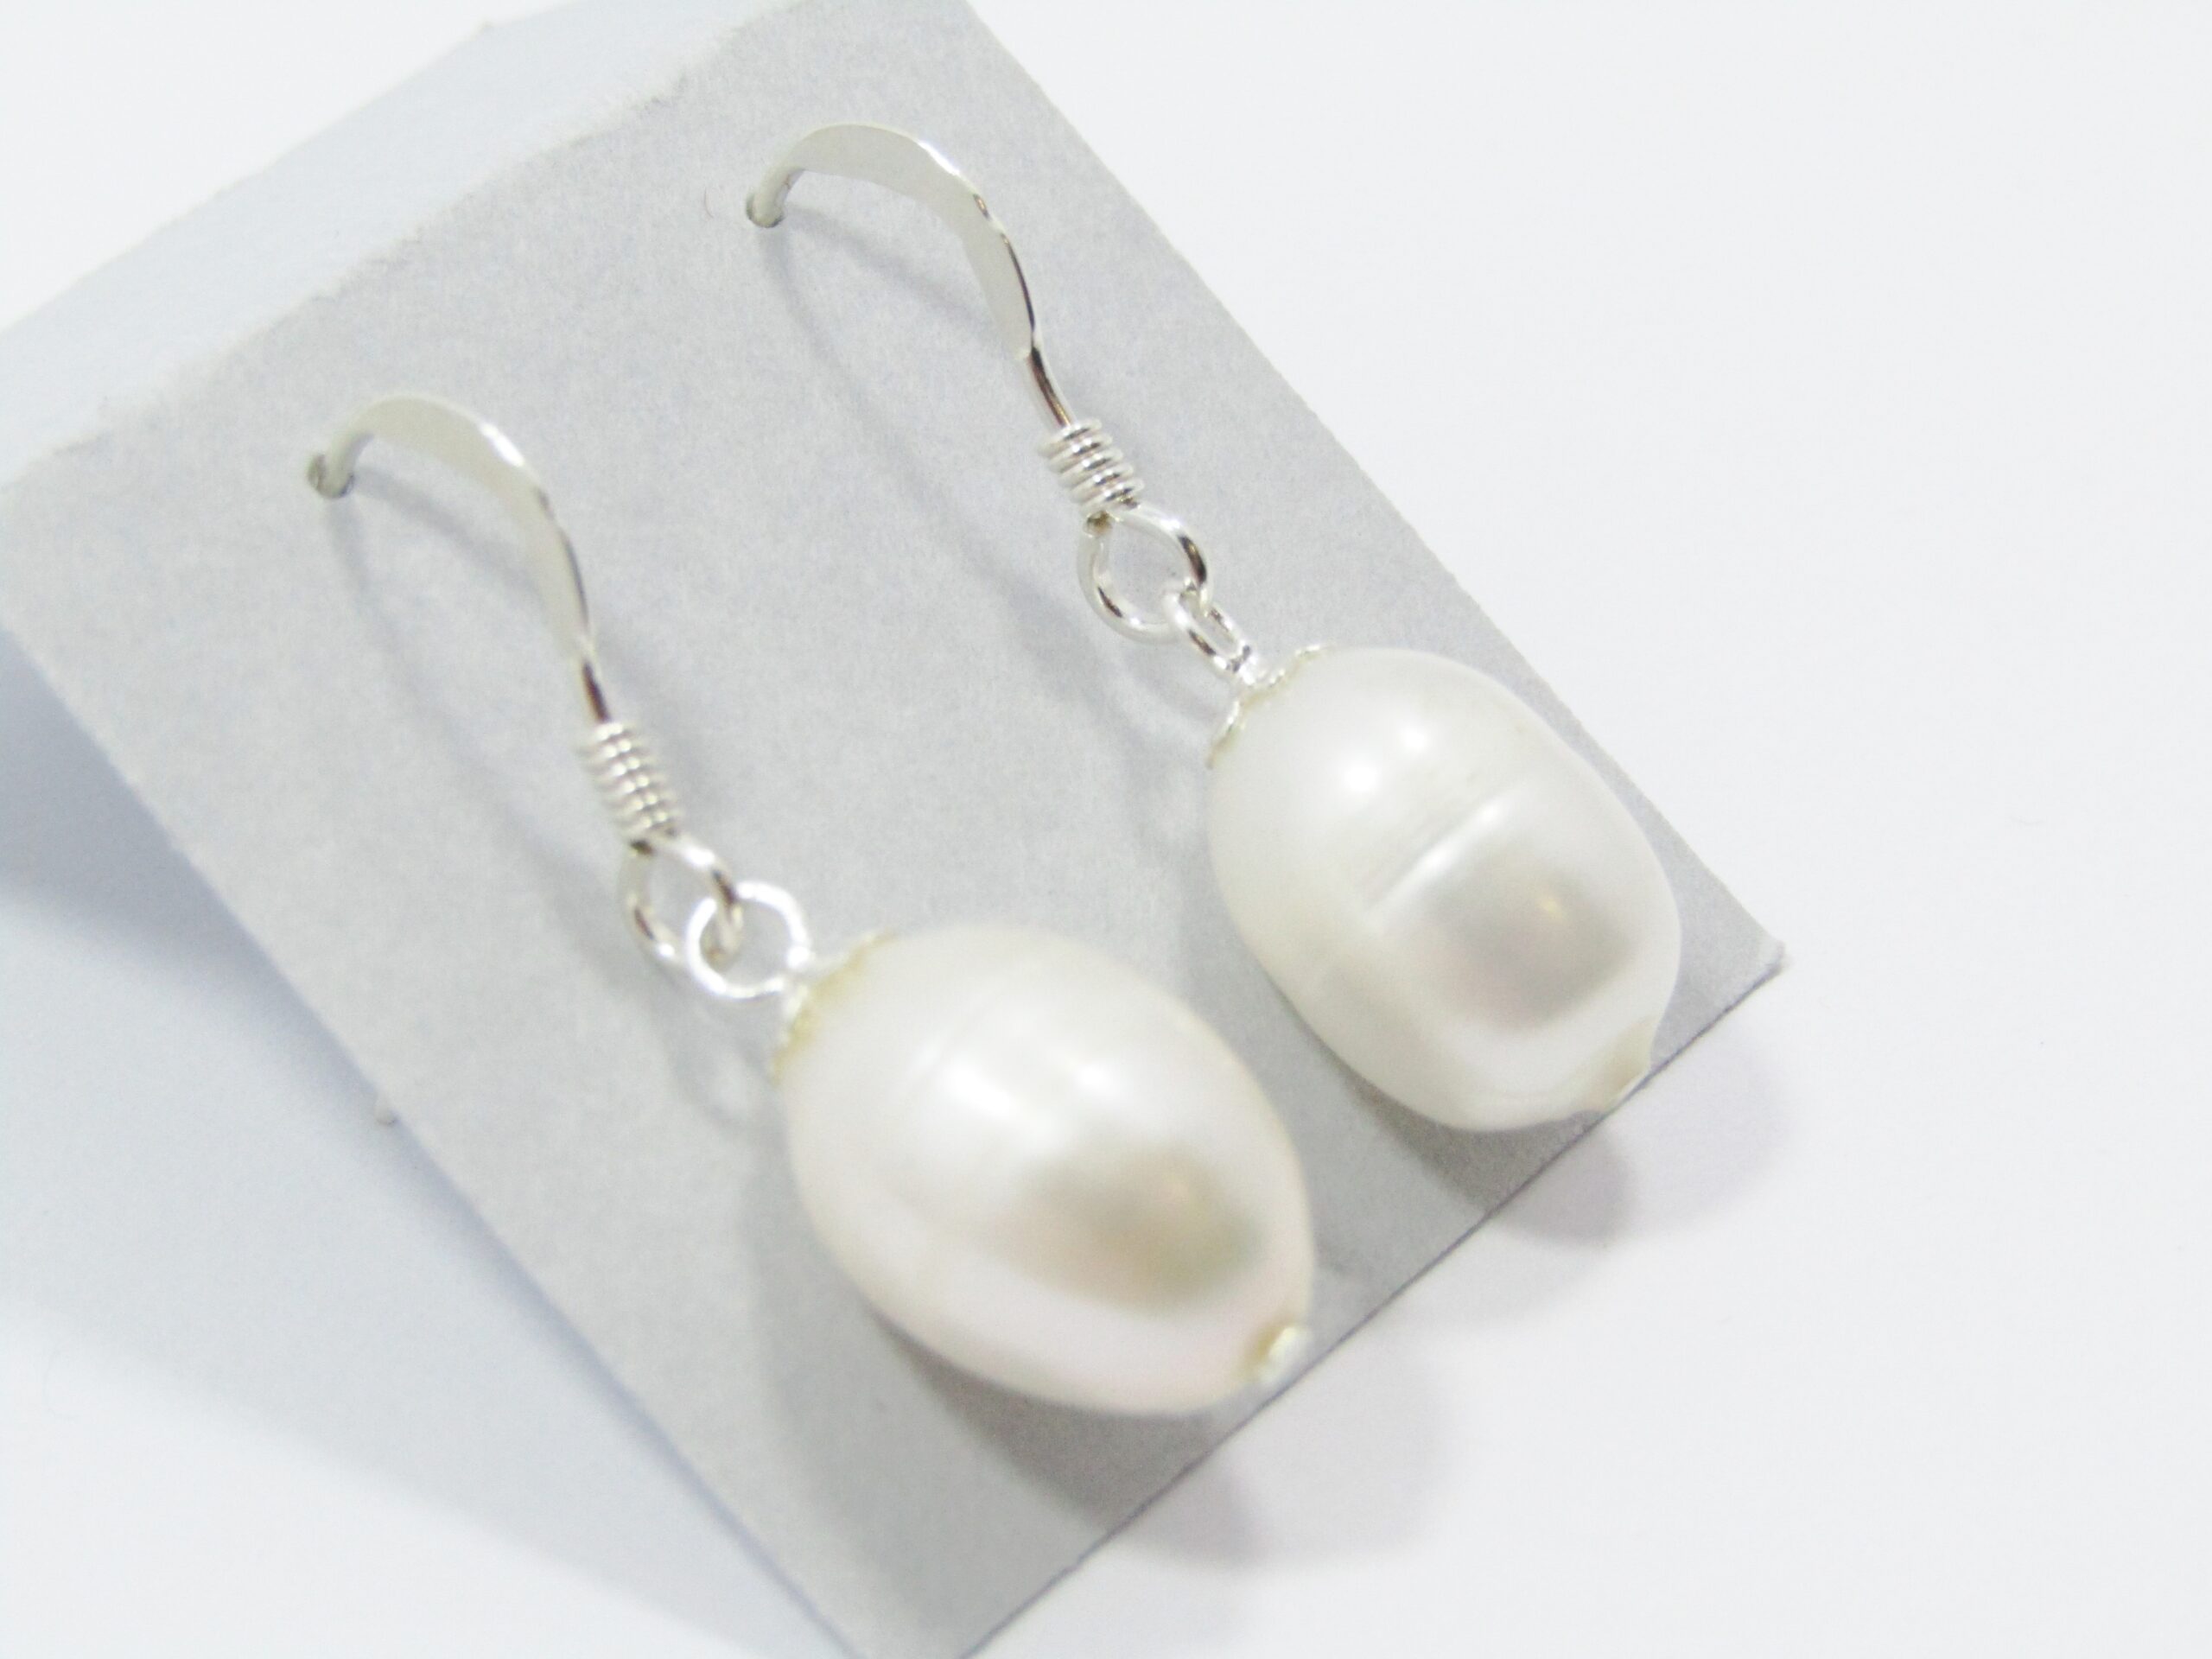 A Gorgeous Fresh Water Pearl Dangling Earrings in Sterling Silver